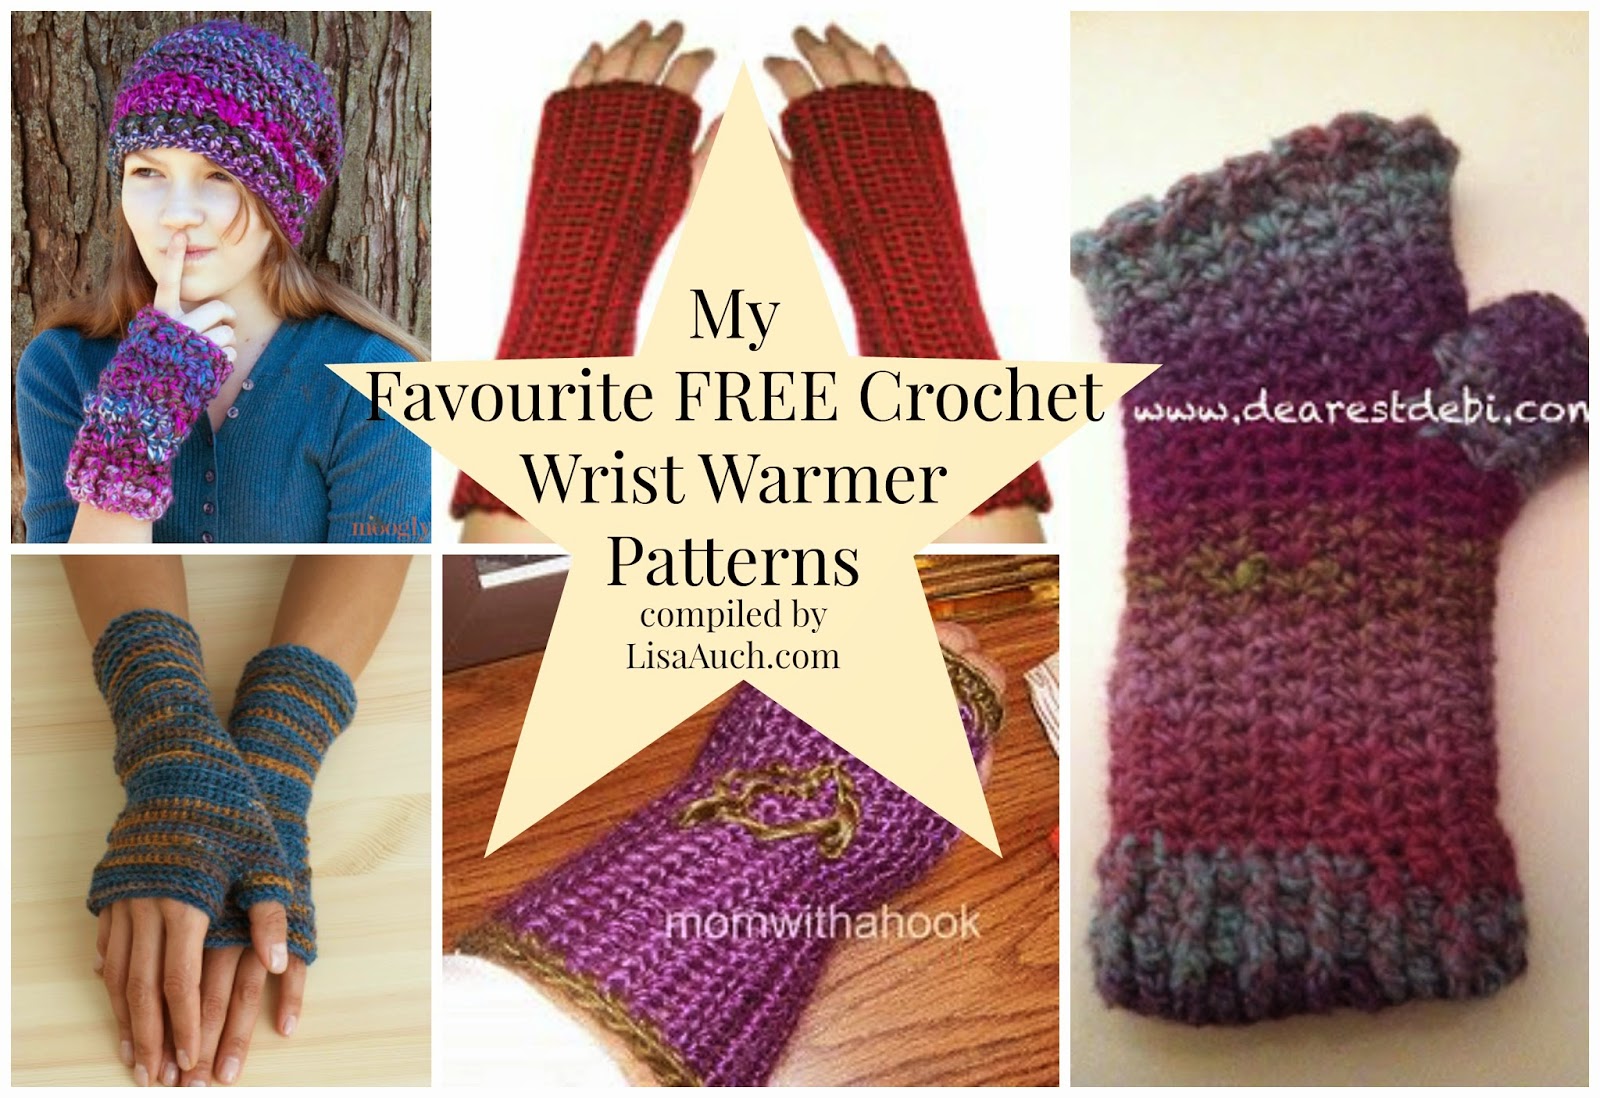 Free Crochet Patterns for Wrist Warmers & Fingerless Gloves